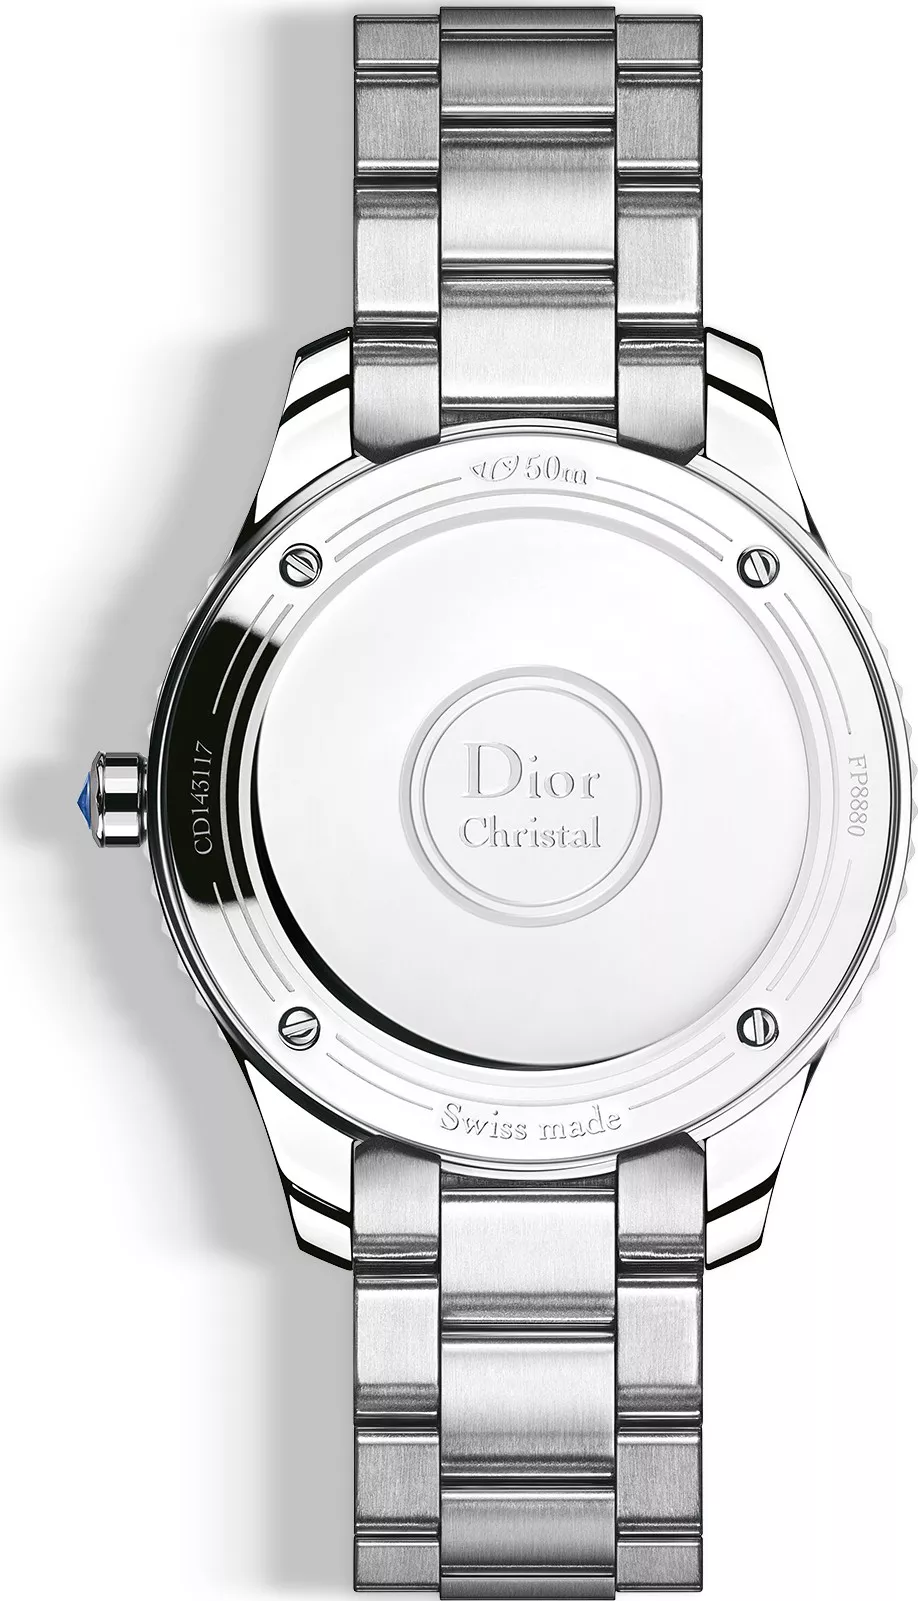 Christian Dior Christal CD143117M001 Sapphire Watch 33